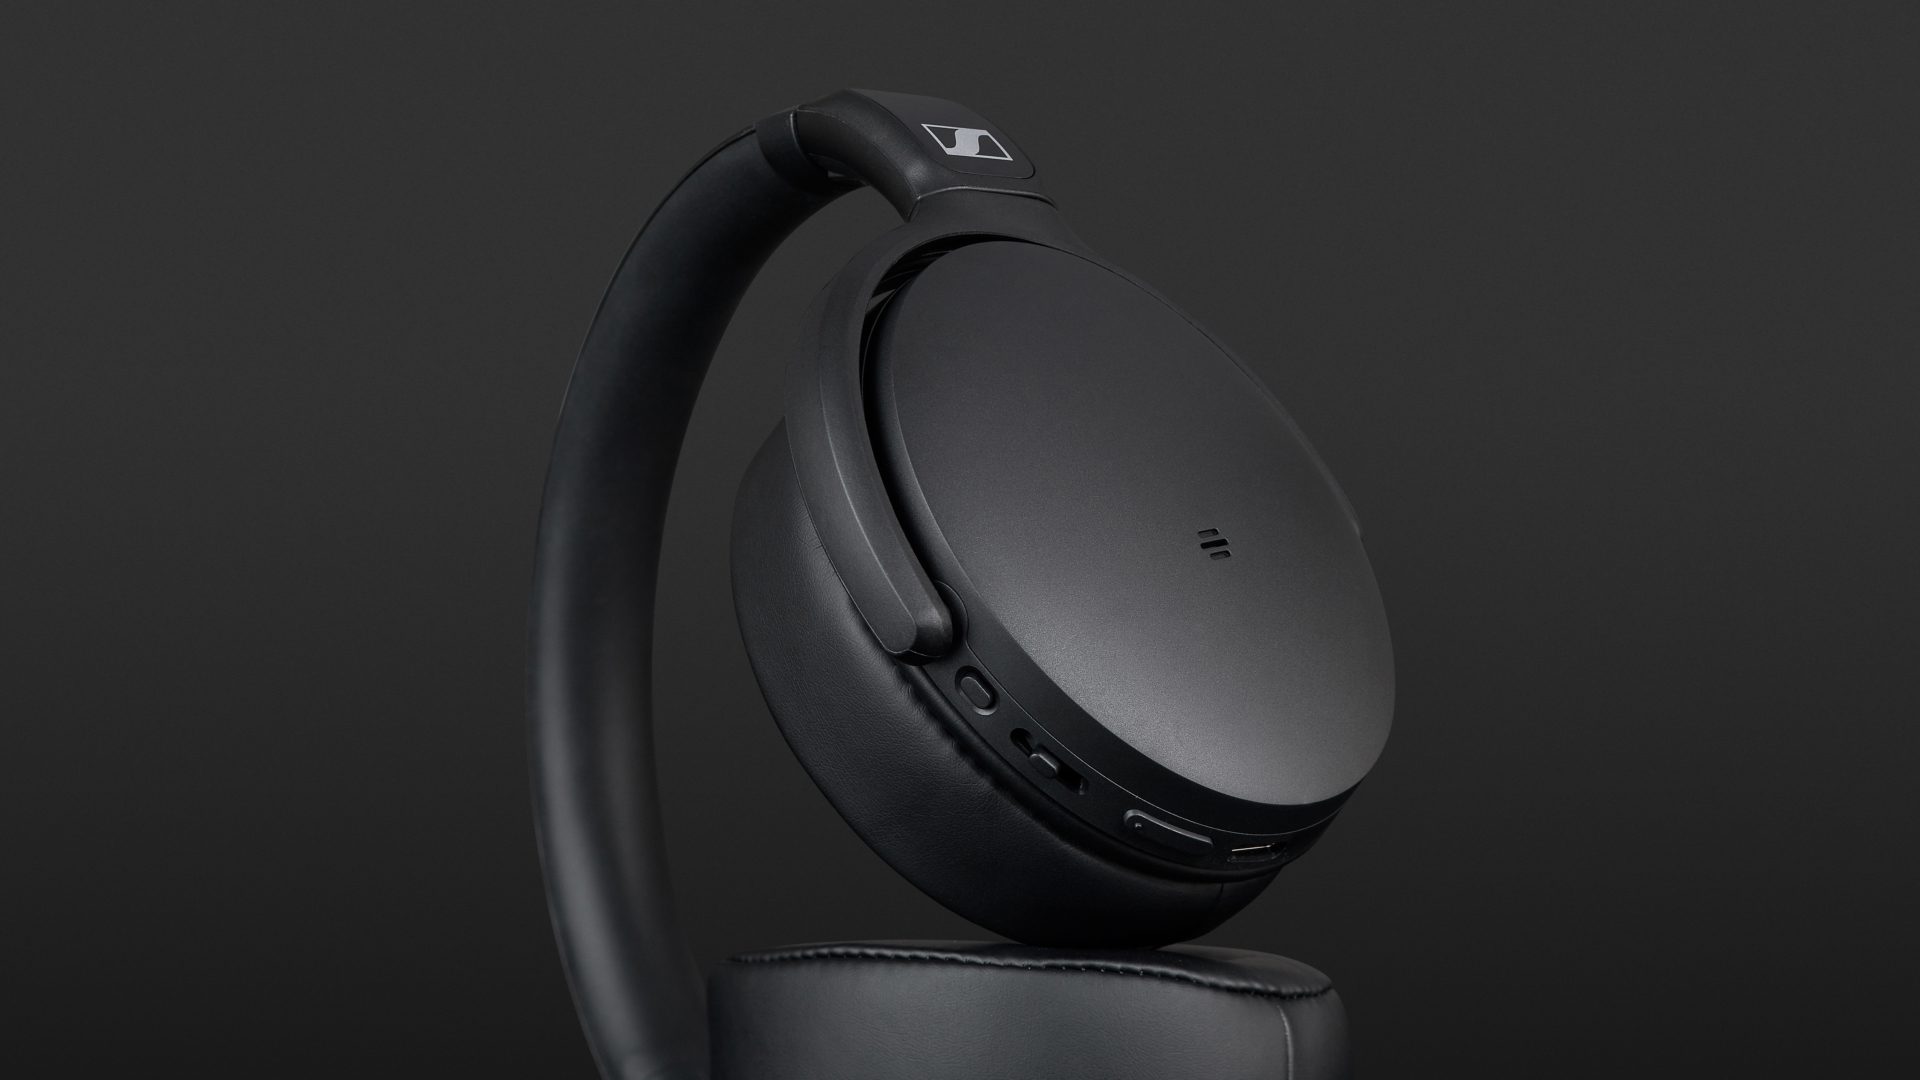 Sennheiser HD 350BT Wireless Bluetooth Only Headphones w/BT 5.0, aptX, aptX  LL 